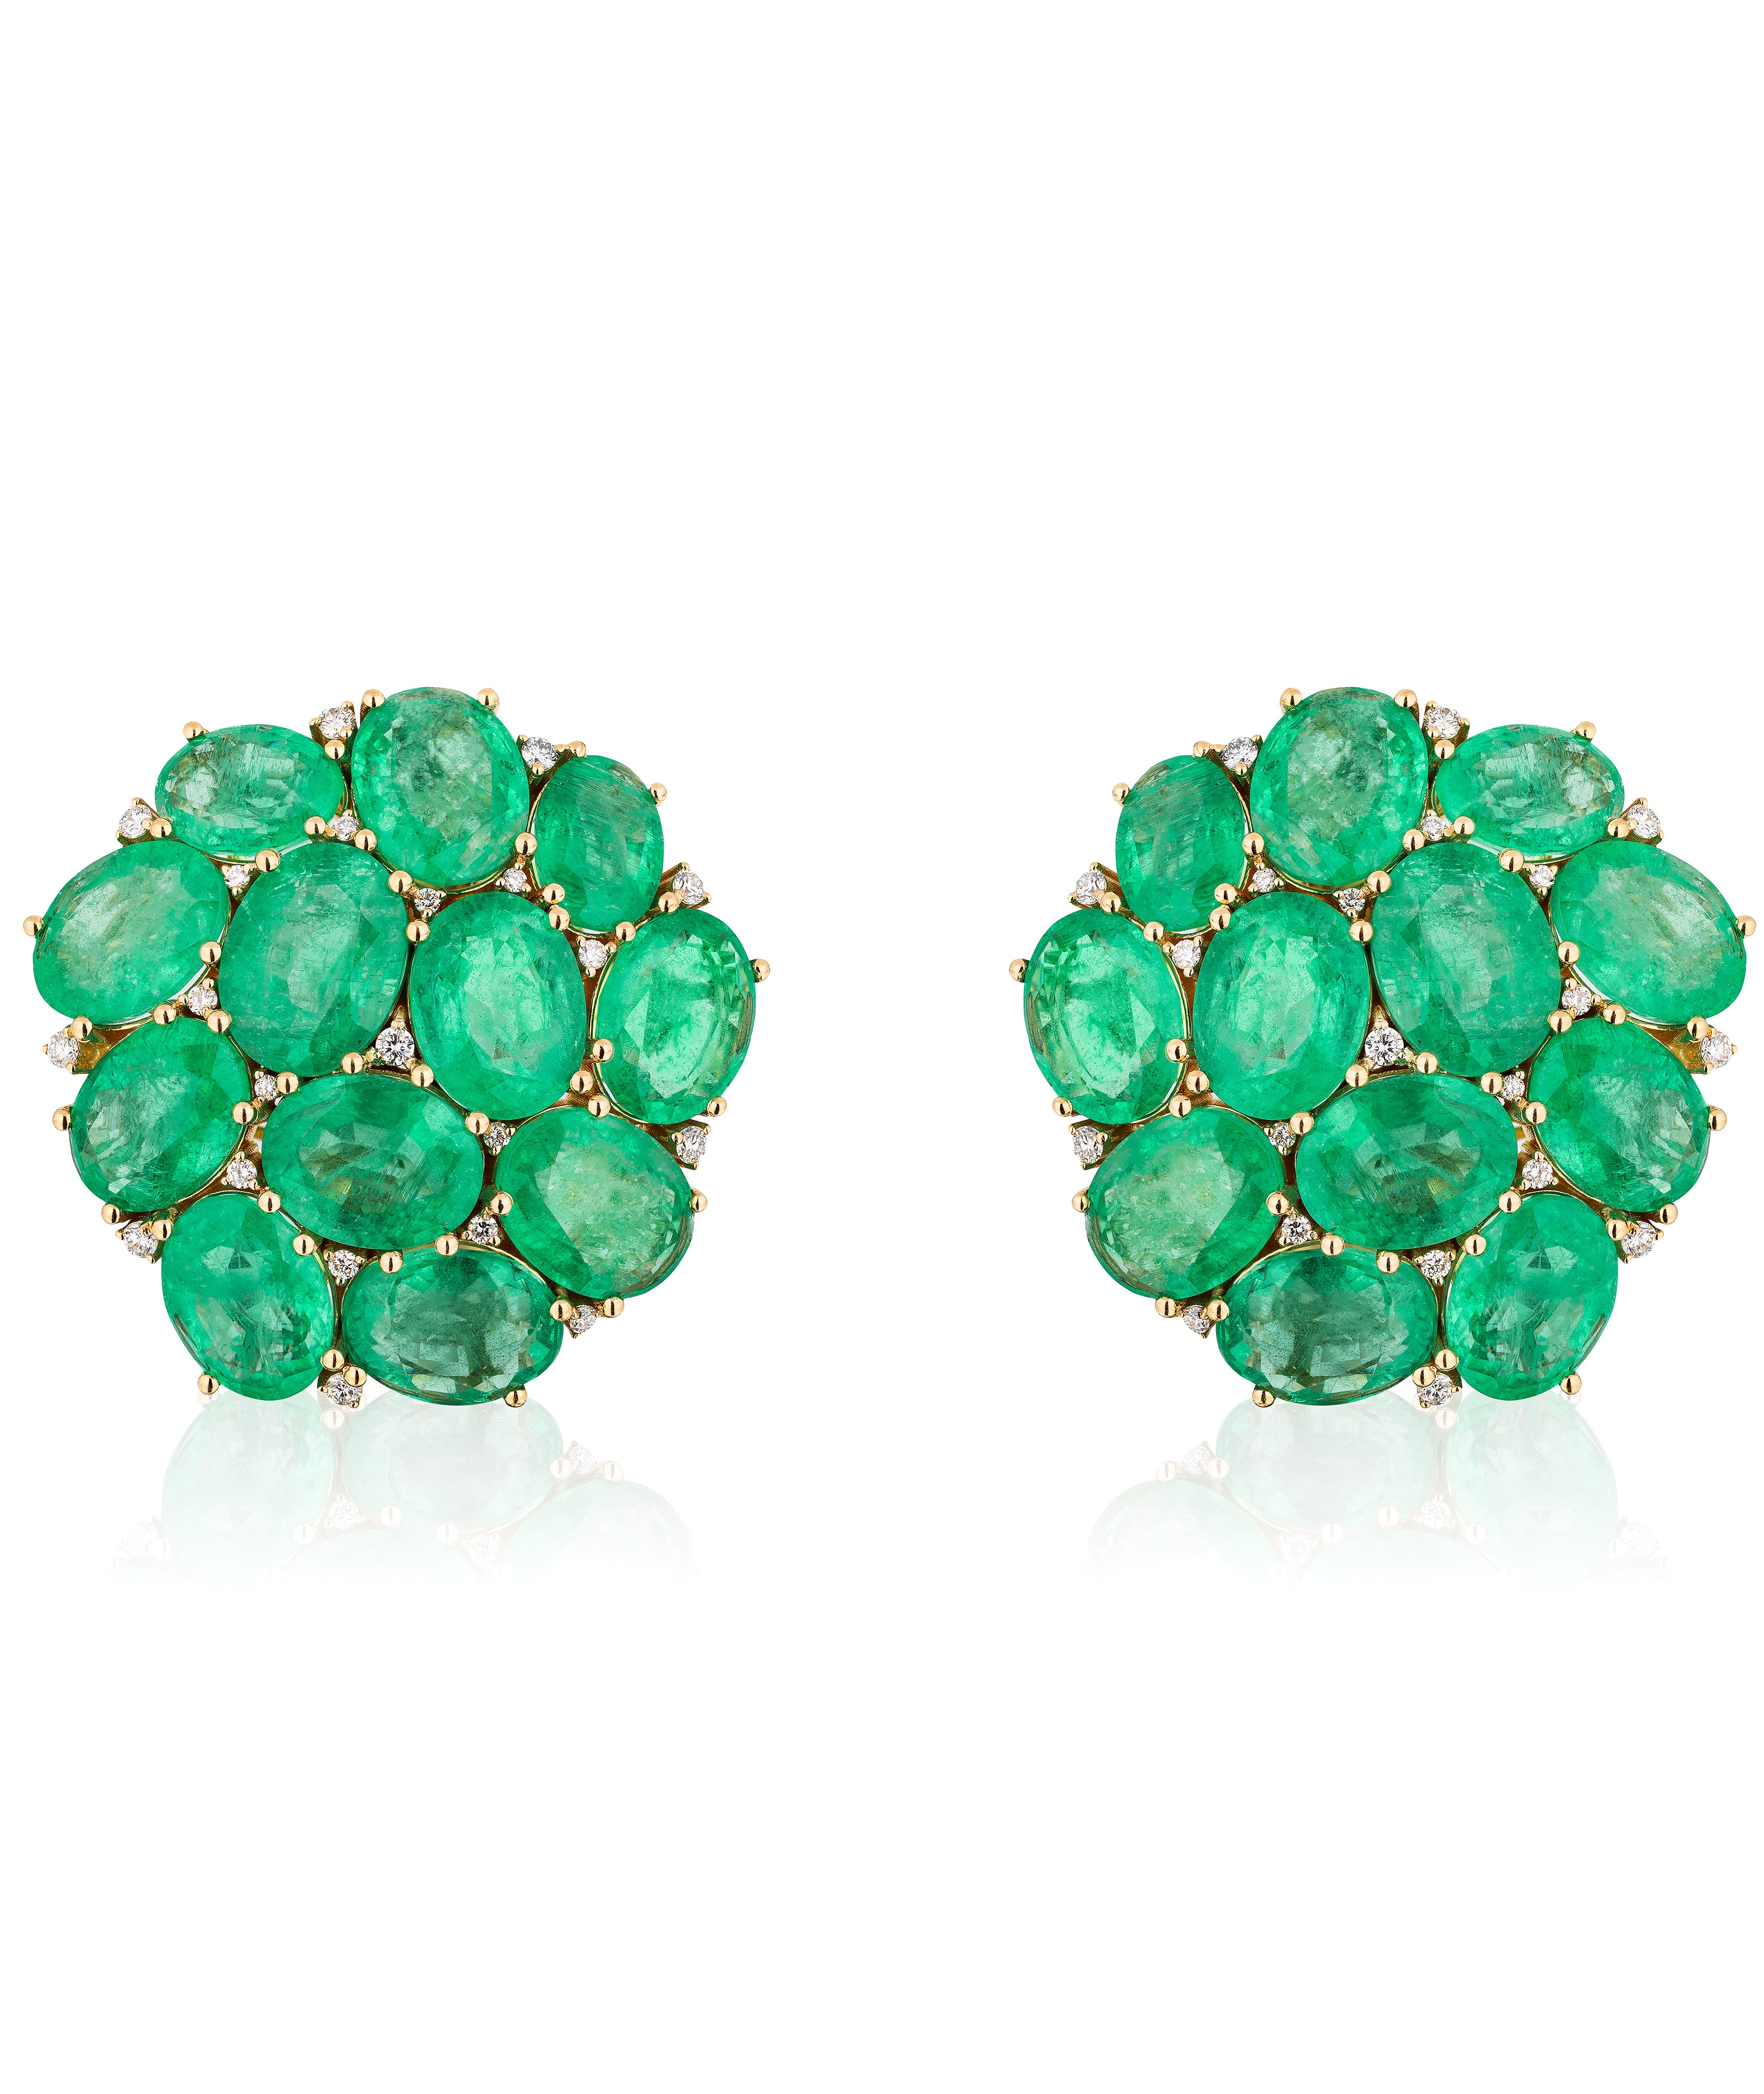 Emerald cluster earring with diamonds by fine jewelry designer Goshwara.